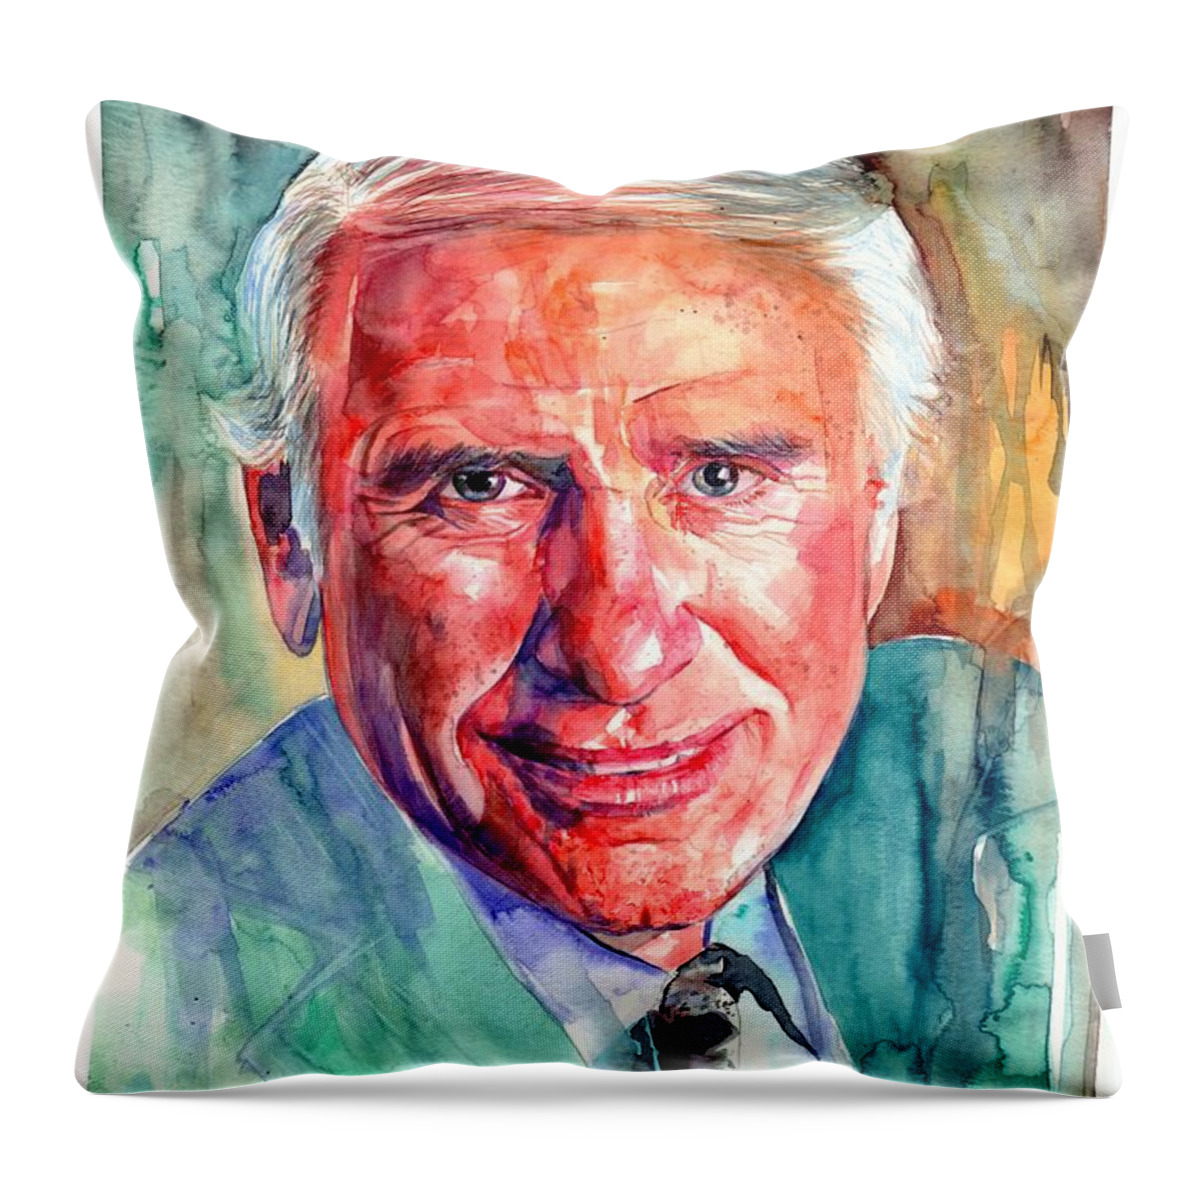 Jim Rohn Throw Pillow featuring the painting Jim Rohn Portrait by Suzann Sines